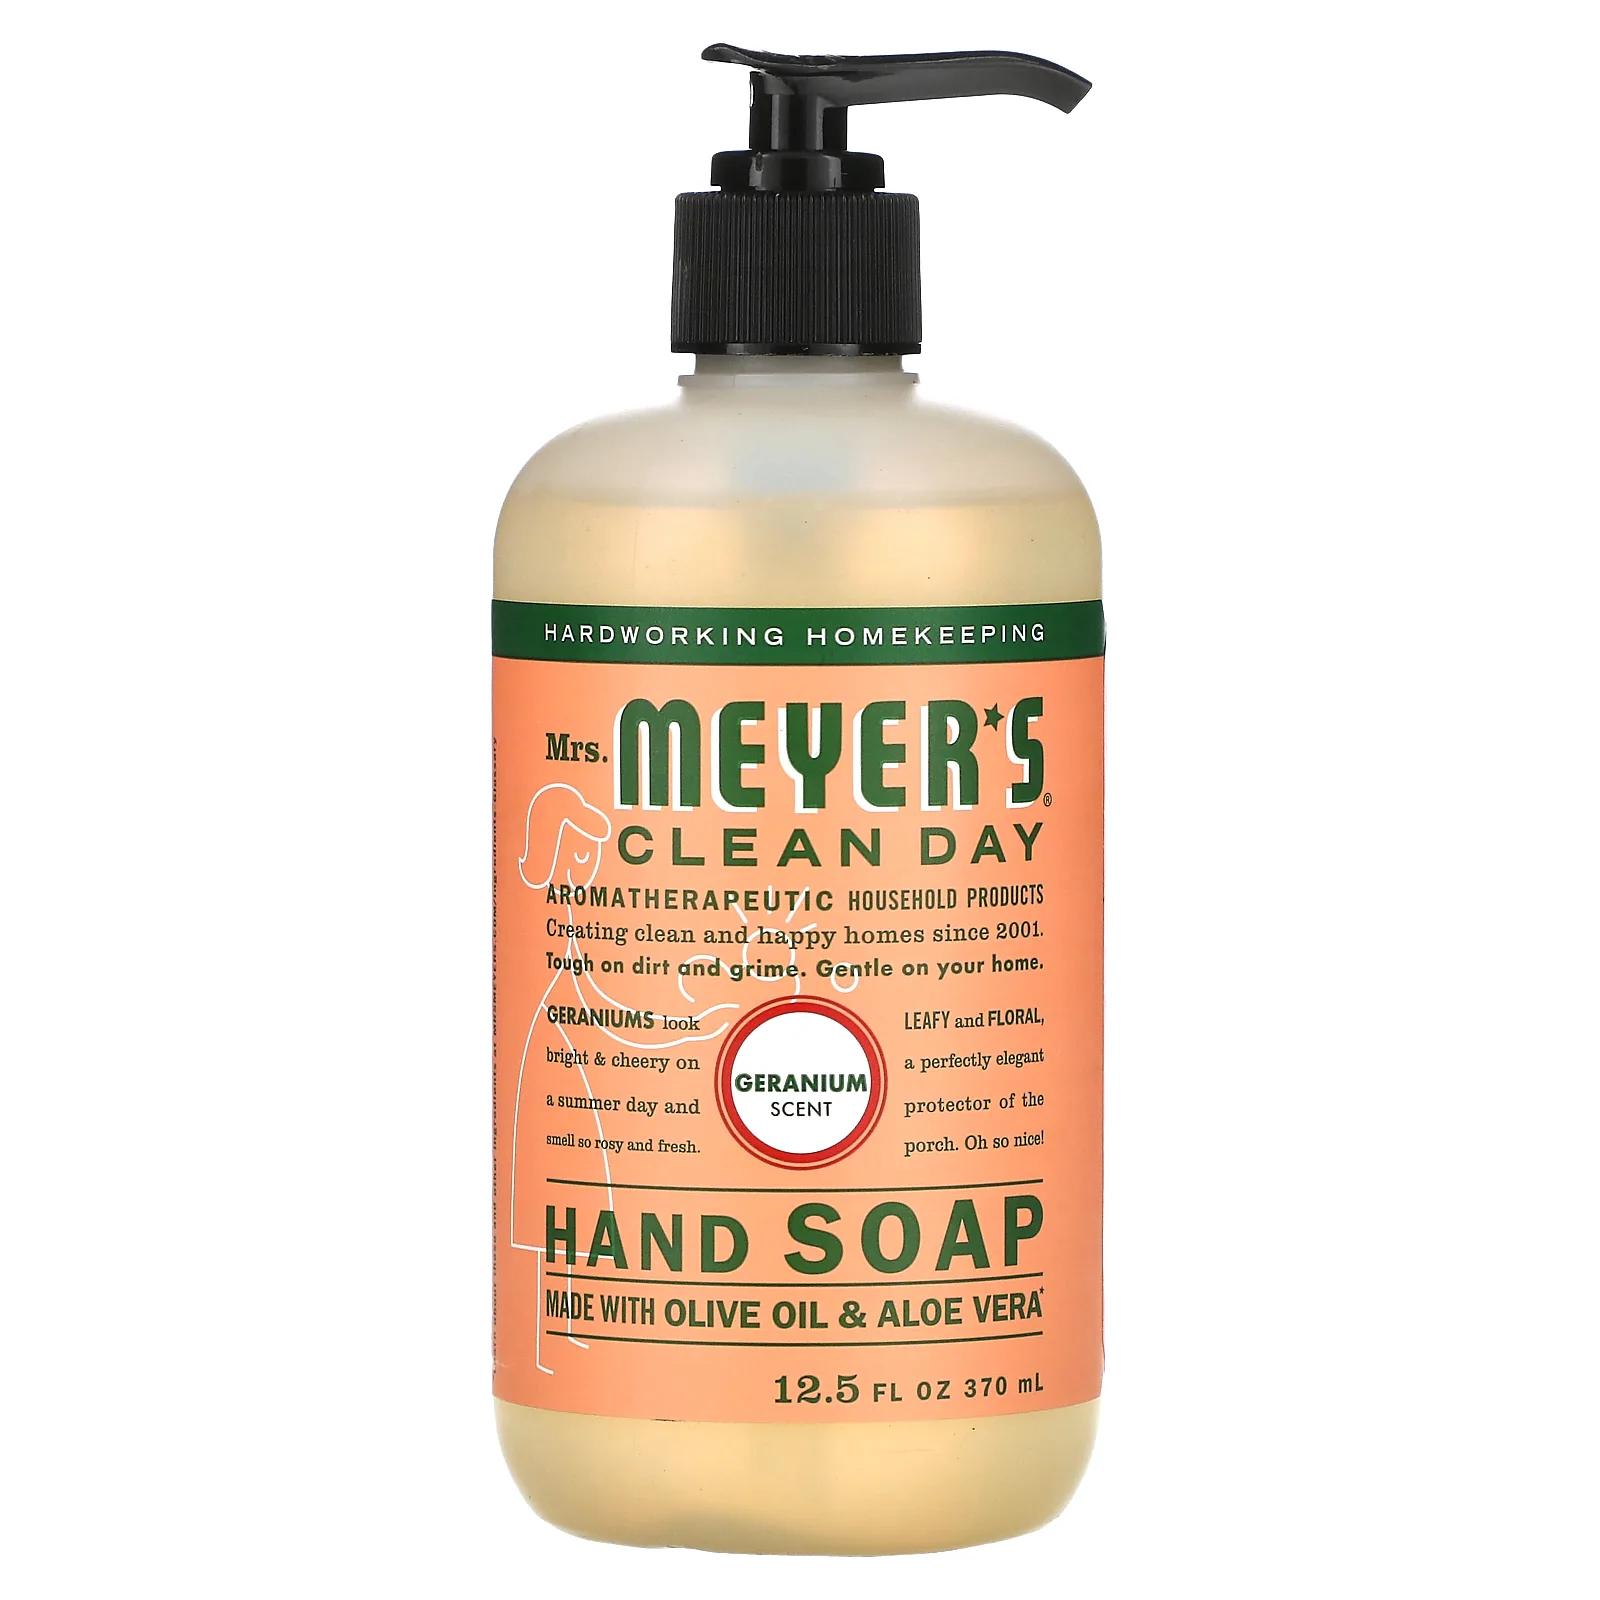 Mrs. Meyers Clean Day Hand Soap Geranium Scent 12.5 fl oz (370 ml) mrs meyers clean day антистатические салфетки аромат лаванды 80 шт